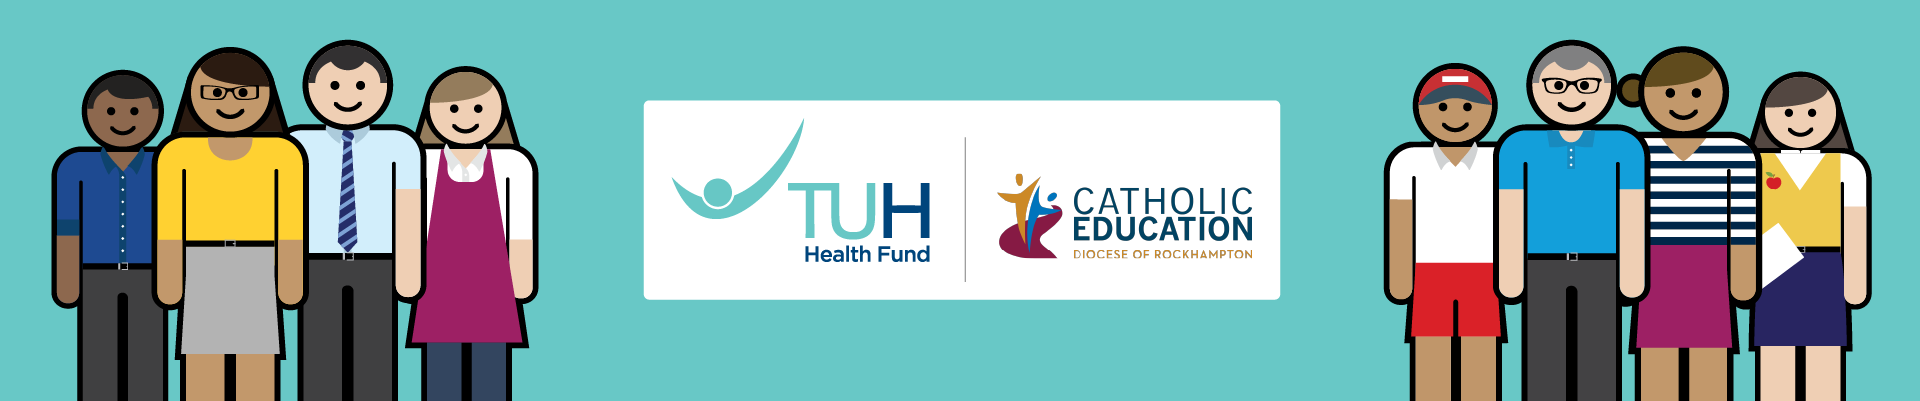 TUH health fund and Catholic Education logo banner